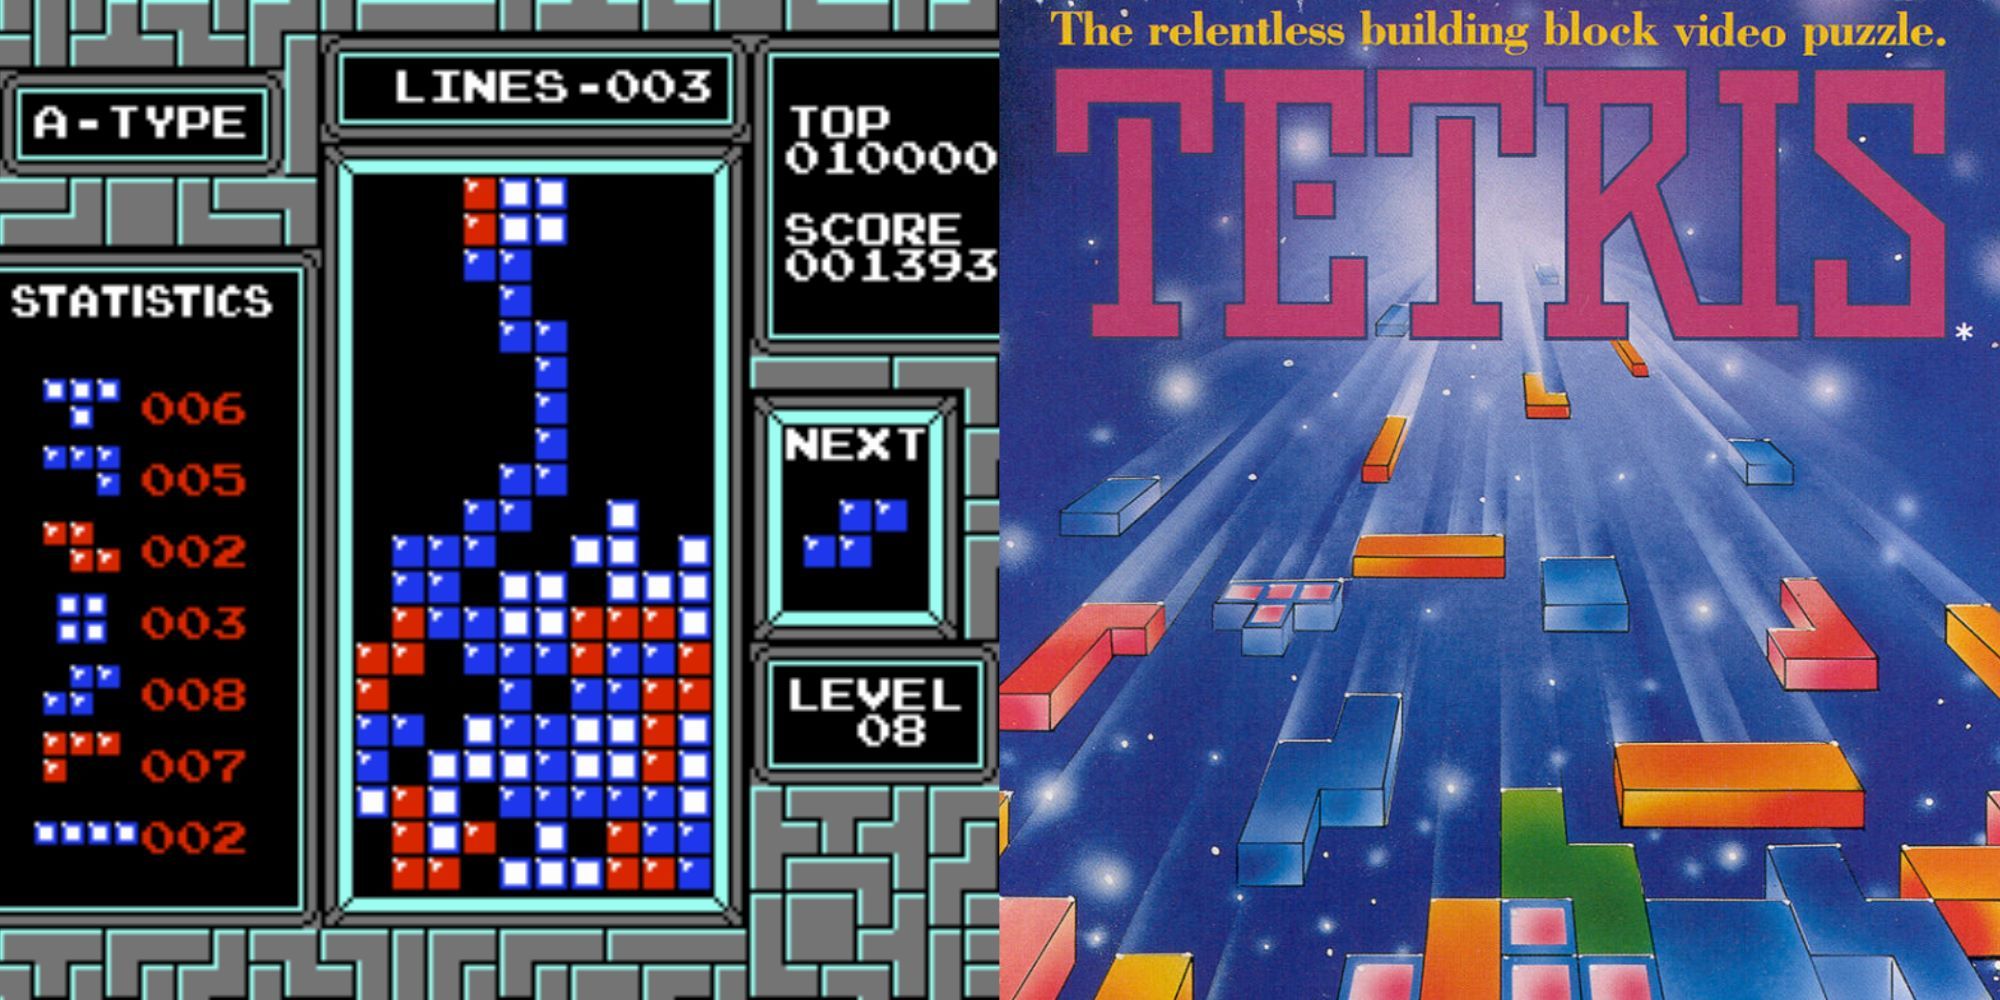 Tetris World Championship Game Sees Highest-Scoring Game of Classic Tetris